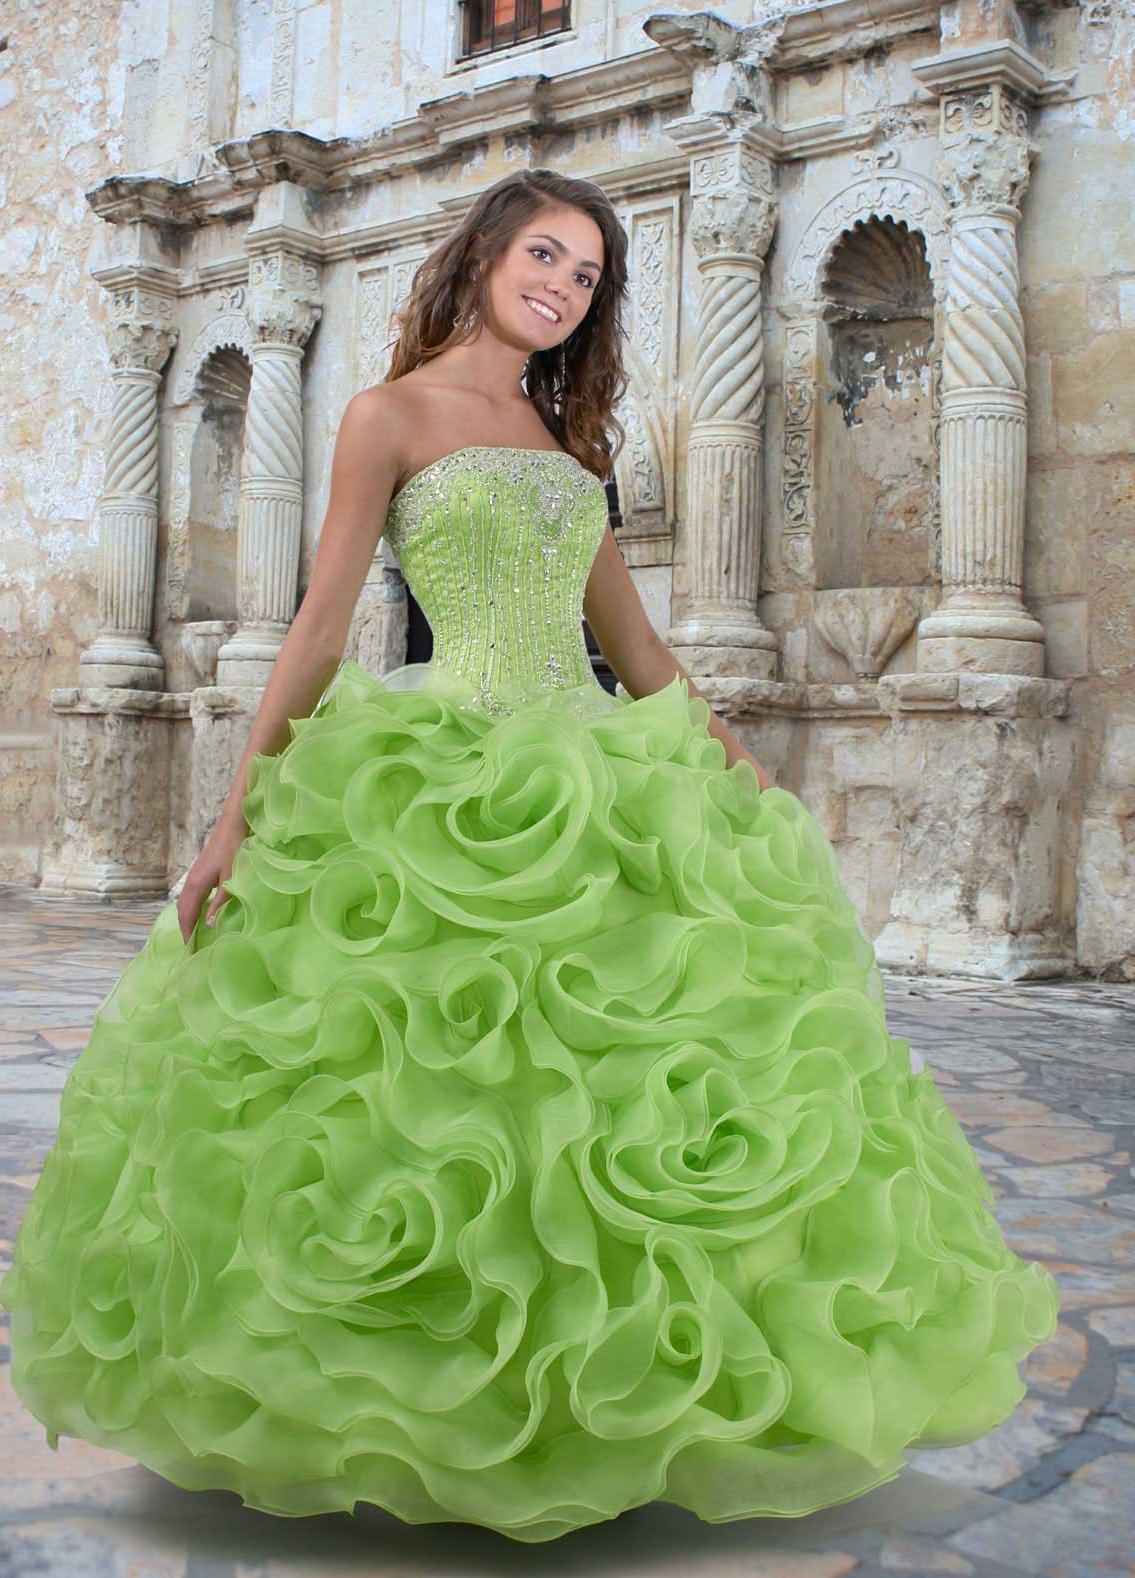 The green wedding dress